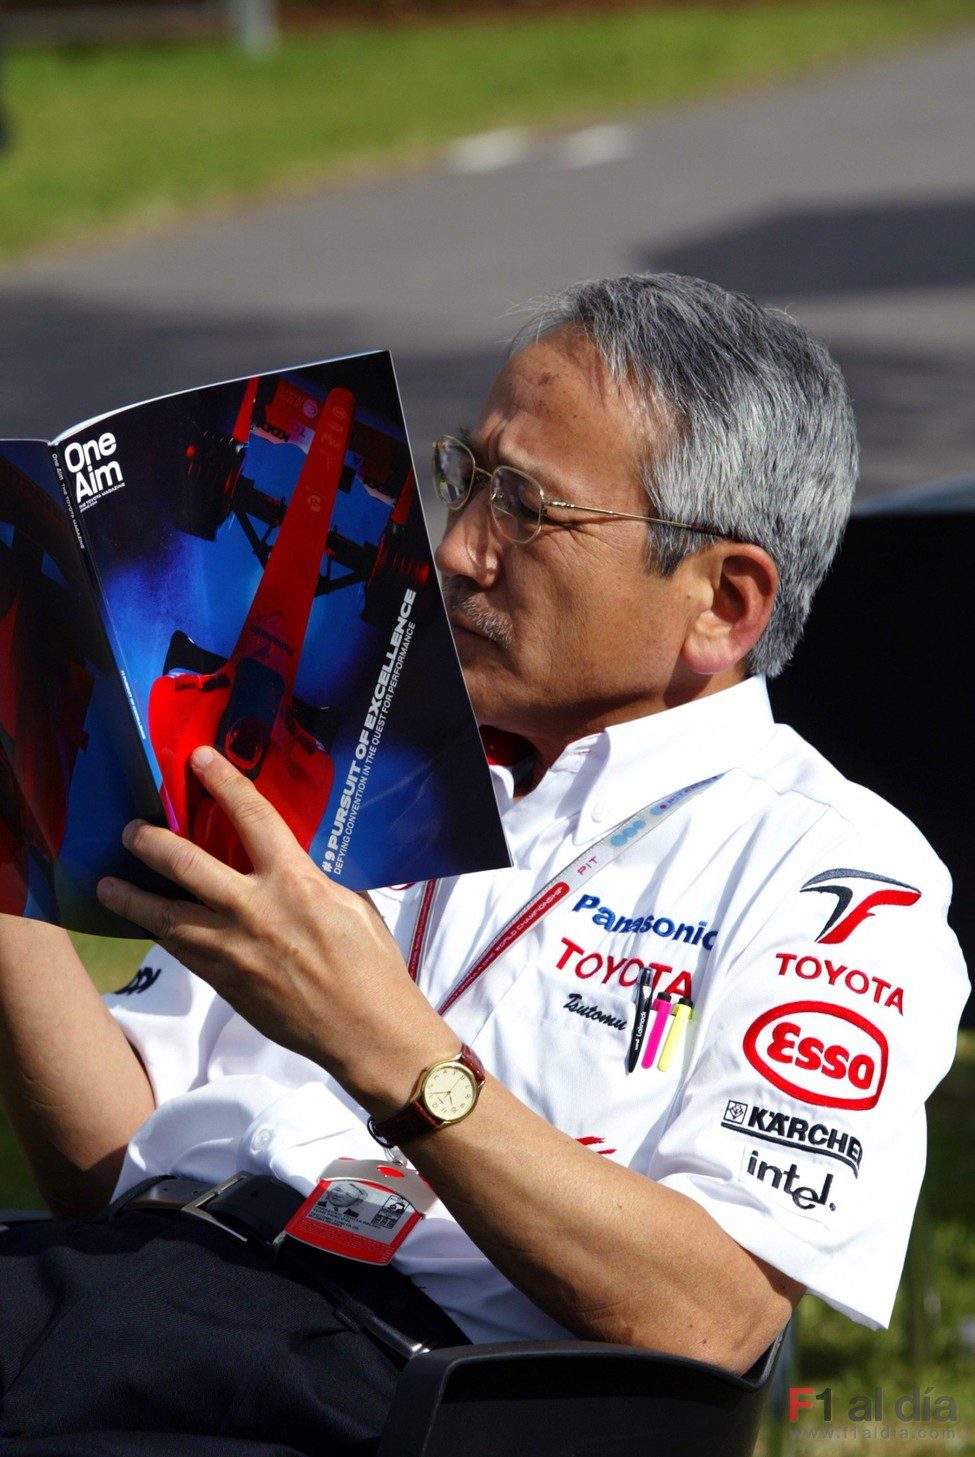 Tsutomu Tomita lee una revista